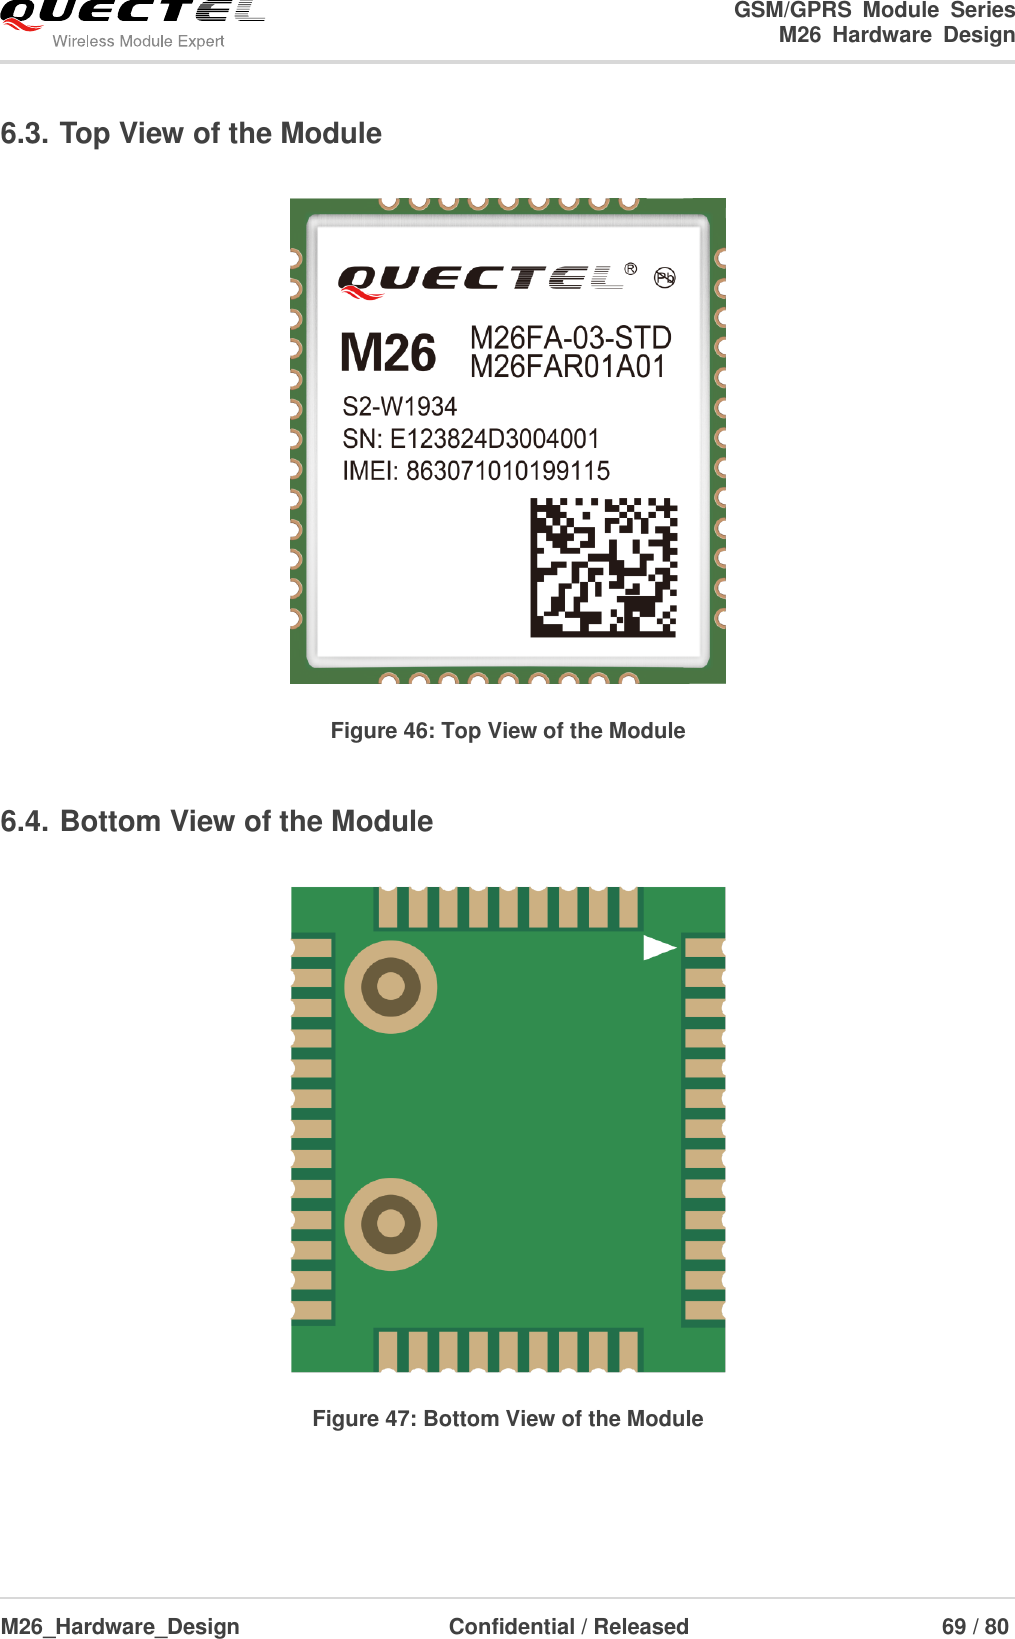                                                                        GSM/GPRS  Module  Series                                                                 M26  Hardware  Design  M26_Hardware_Design                     Confidential / Released                              69 / 80      6.3. Top View of the Module   Figure 46: Top View of the Module 6.4. Bottom View of the Module   Figure 47: Bottom View of the Module 